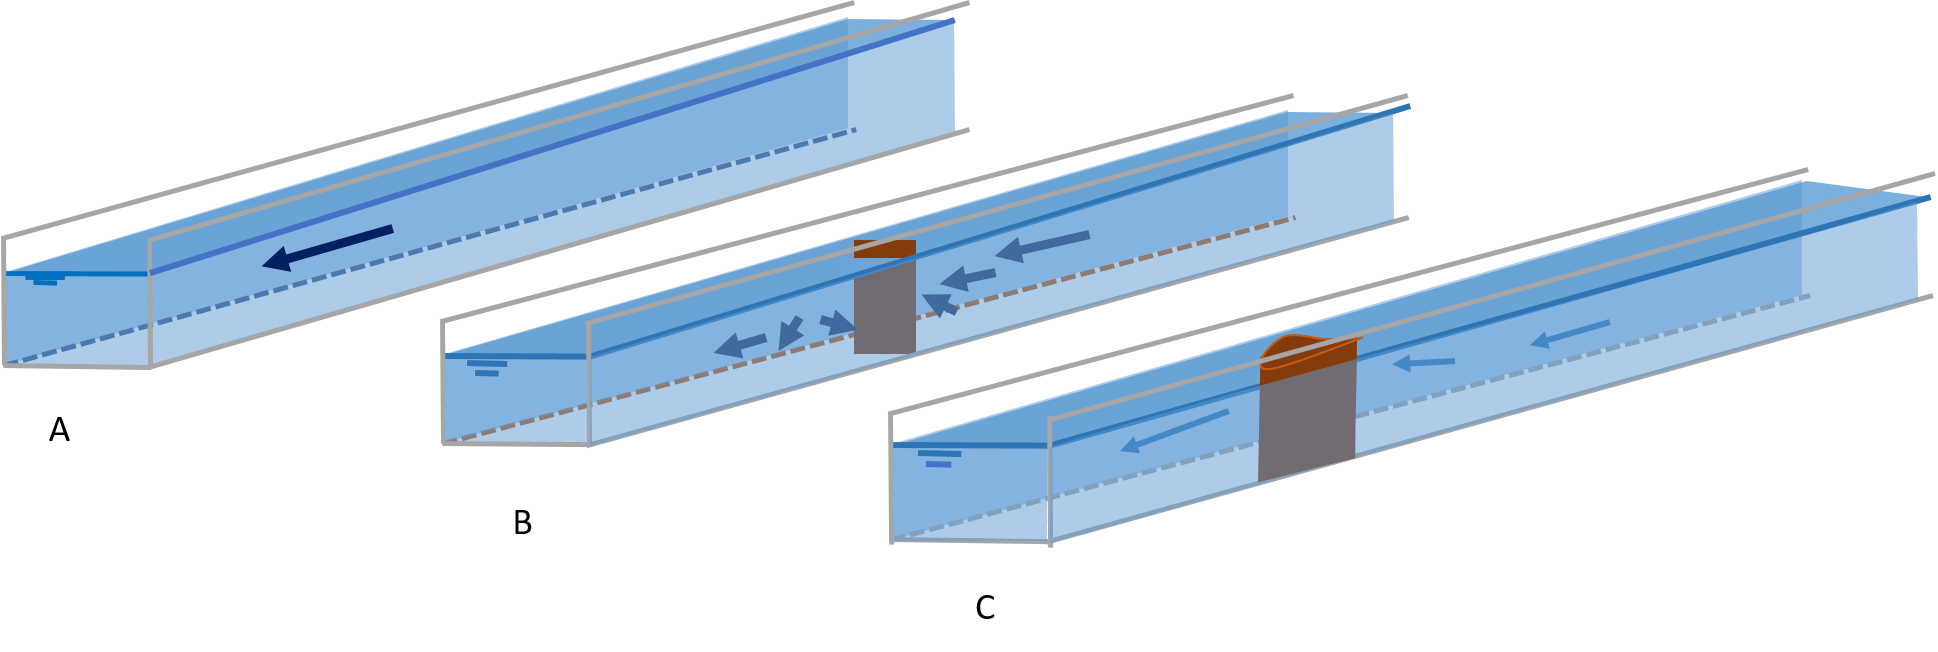 bathymetry variations example